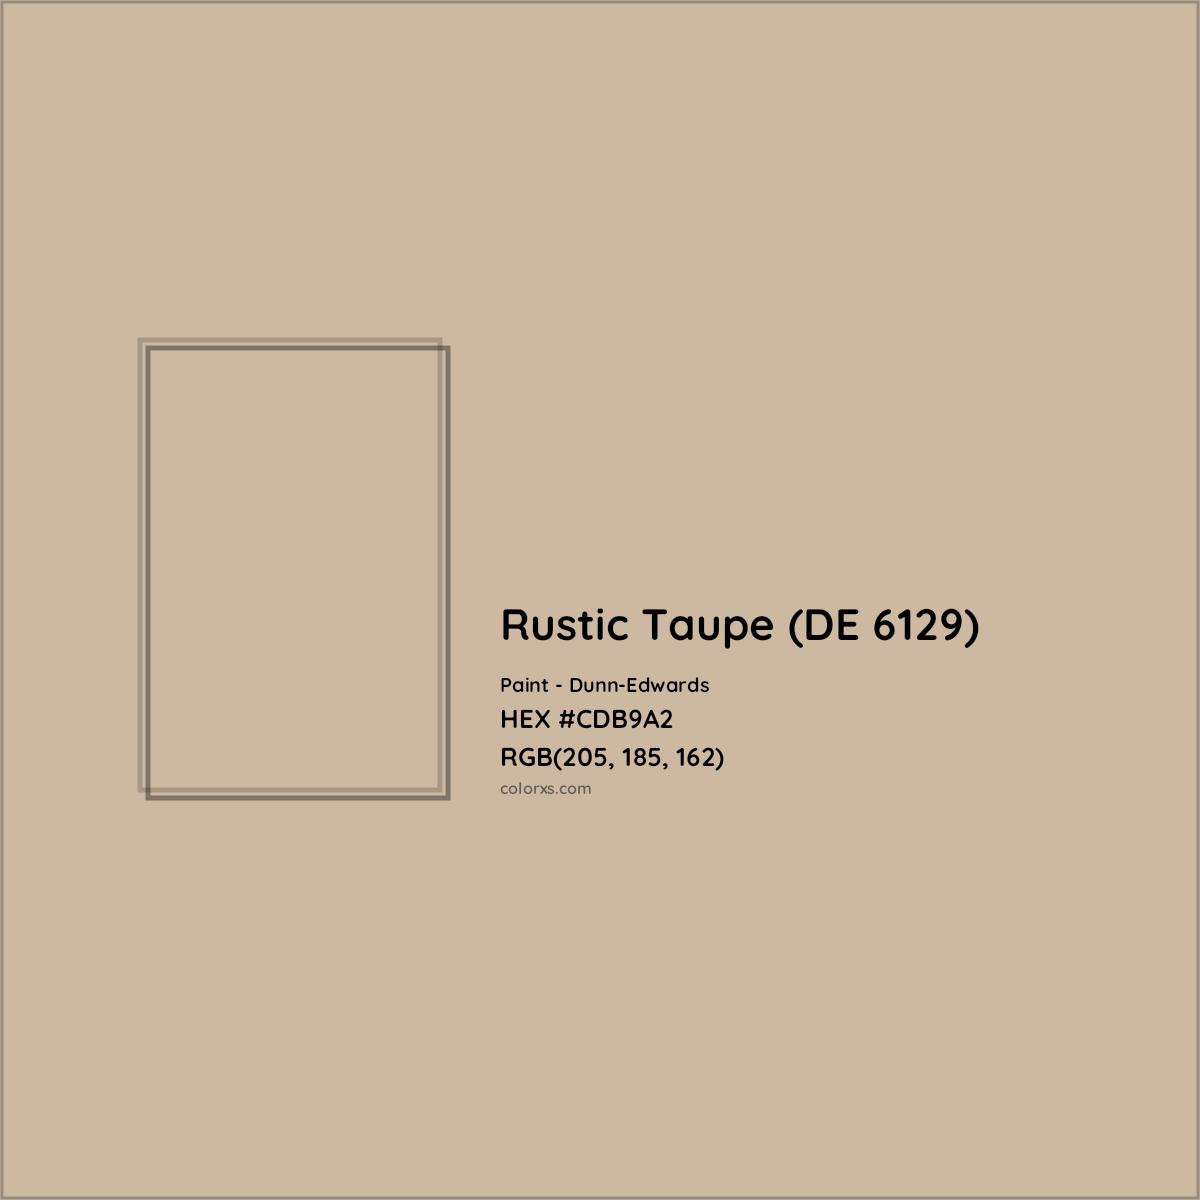 HEX #CDB9A2 Rustic Taupe (DE 6129) Paint Dunn-Edwards - Color Code